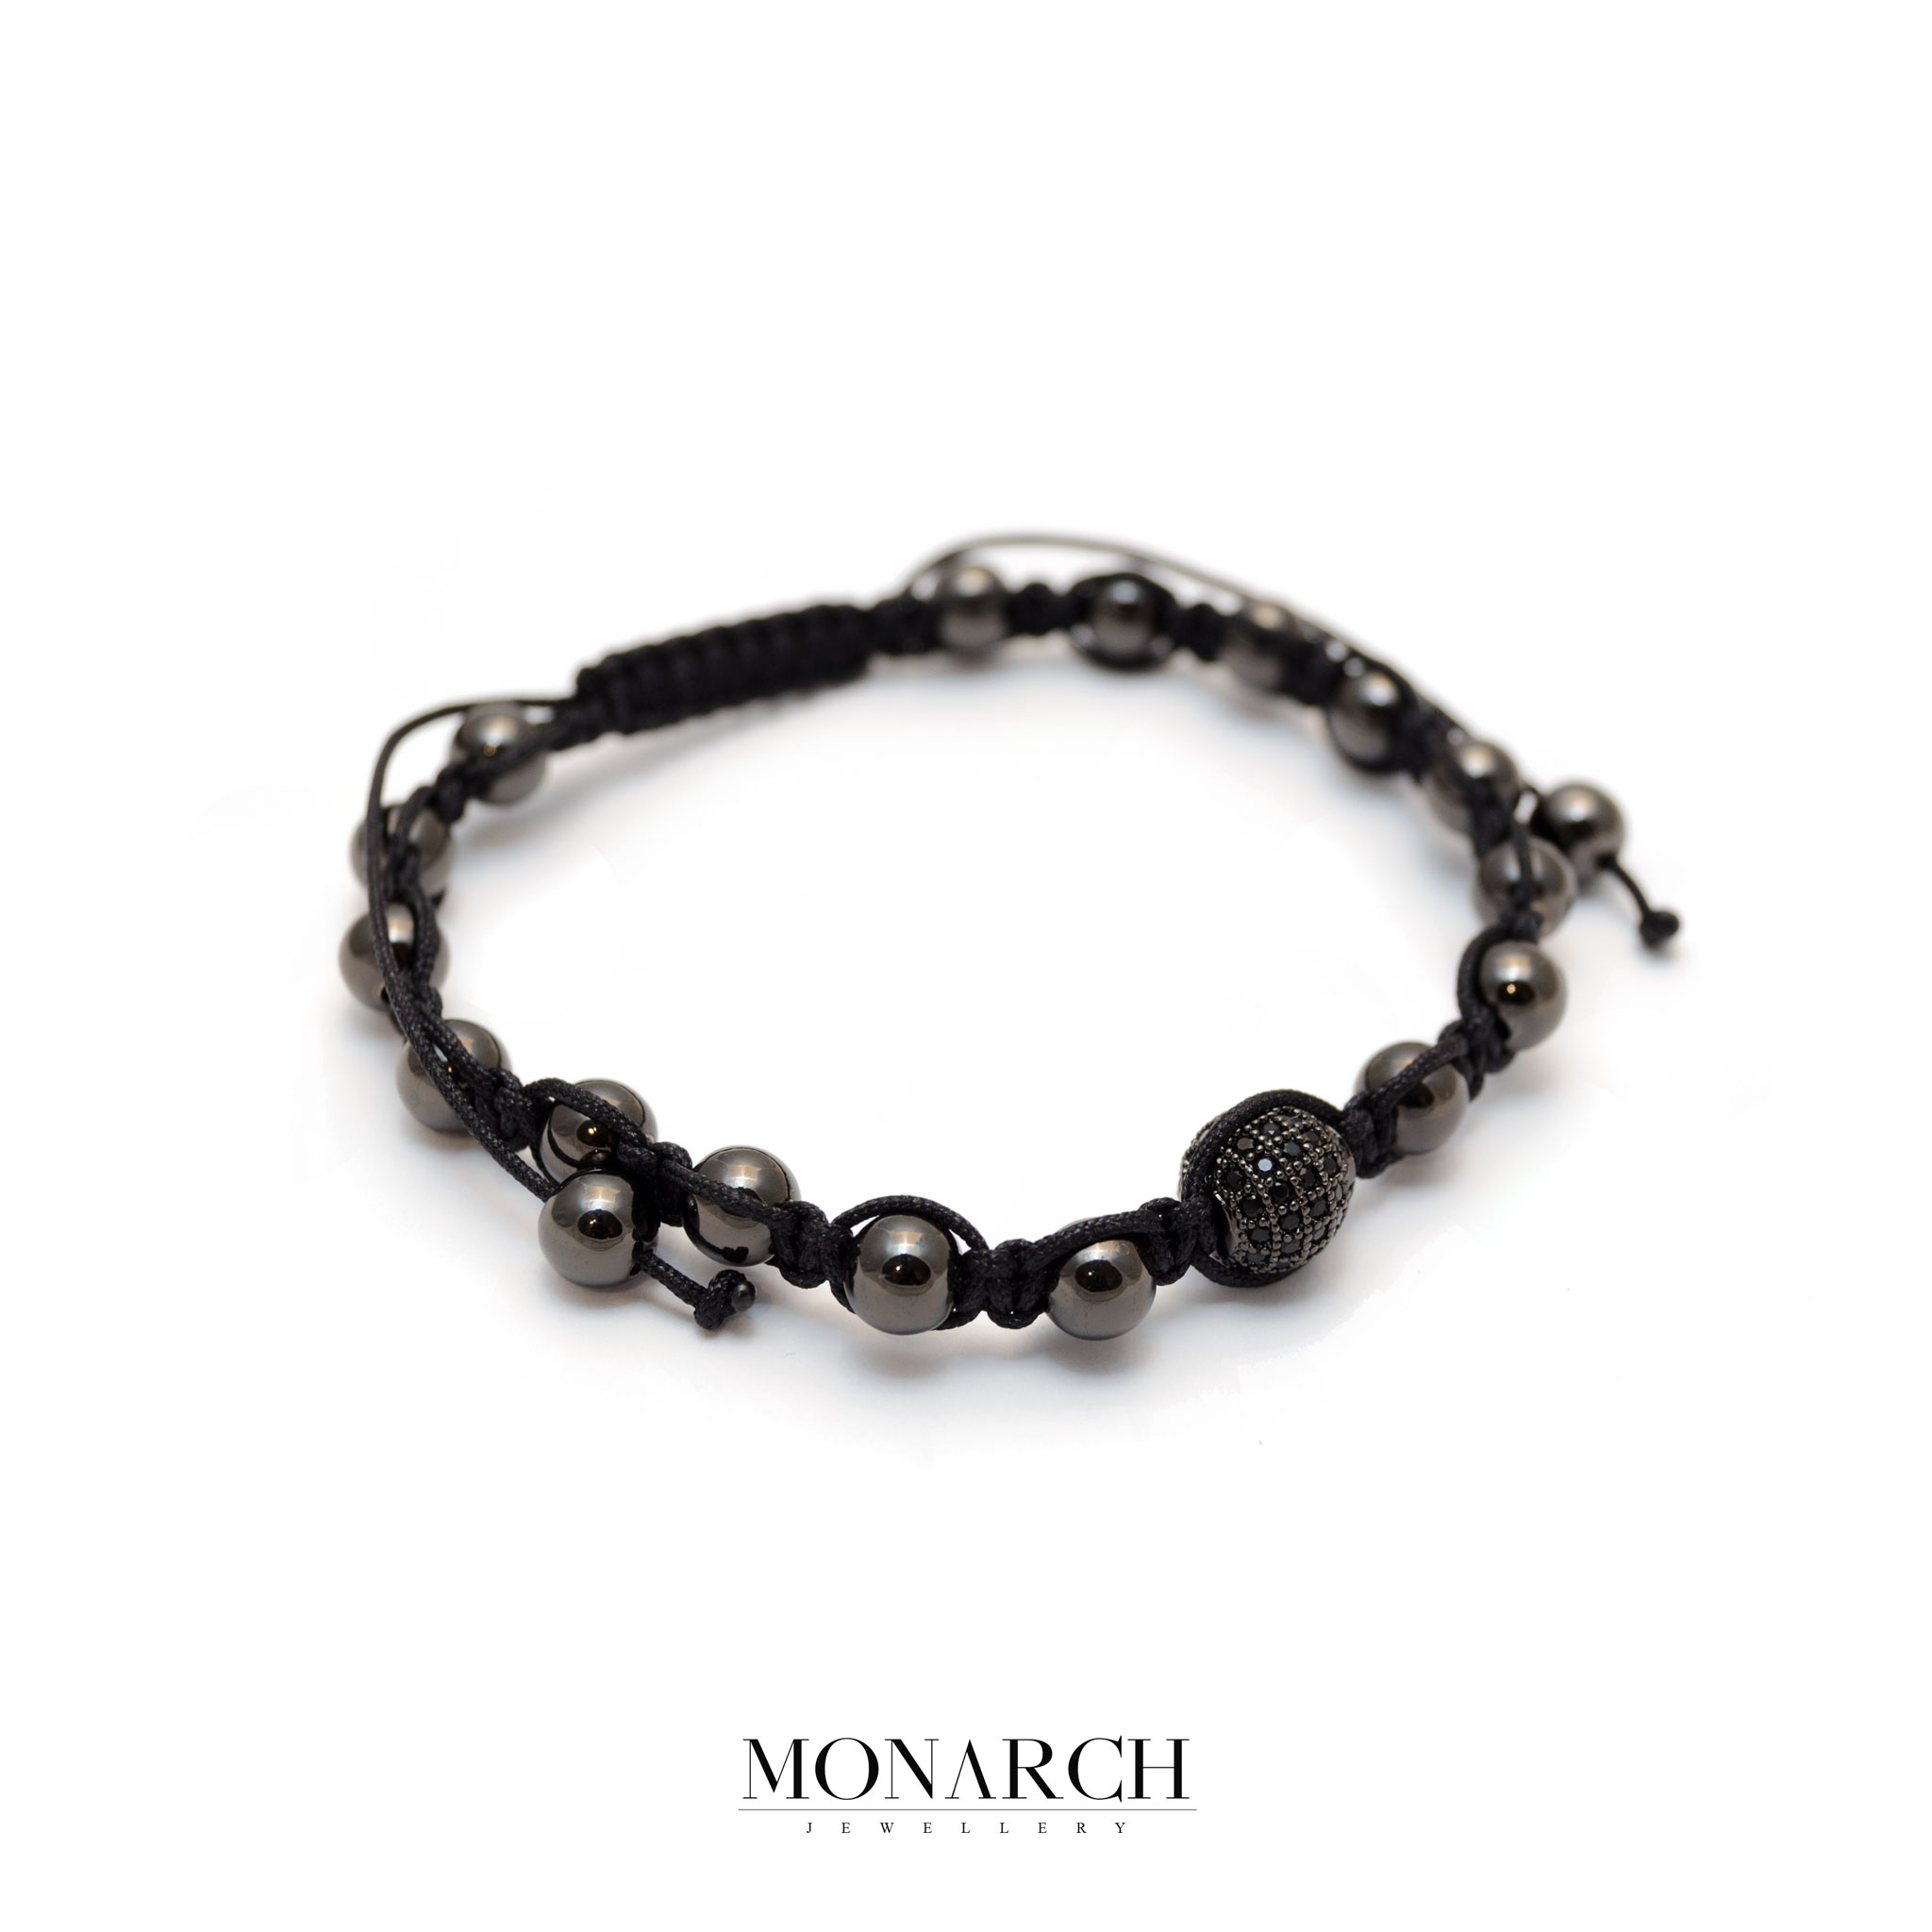 Monarch Jewellery Black Beads Macrame Bracelet